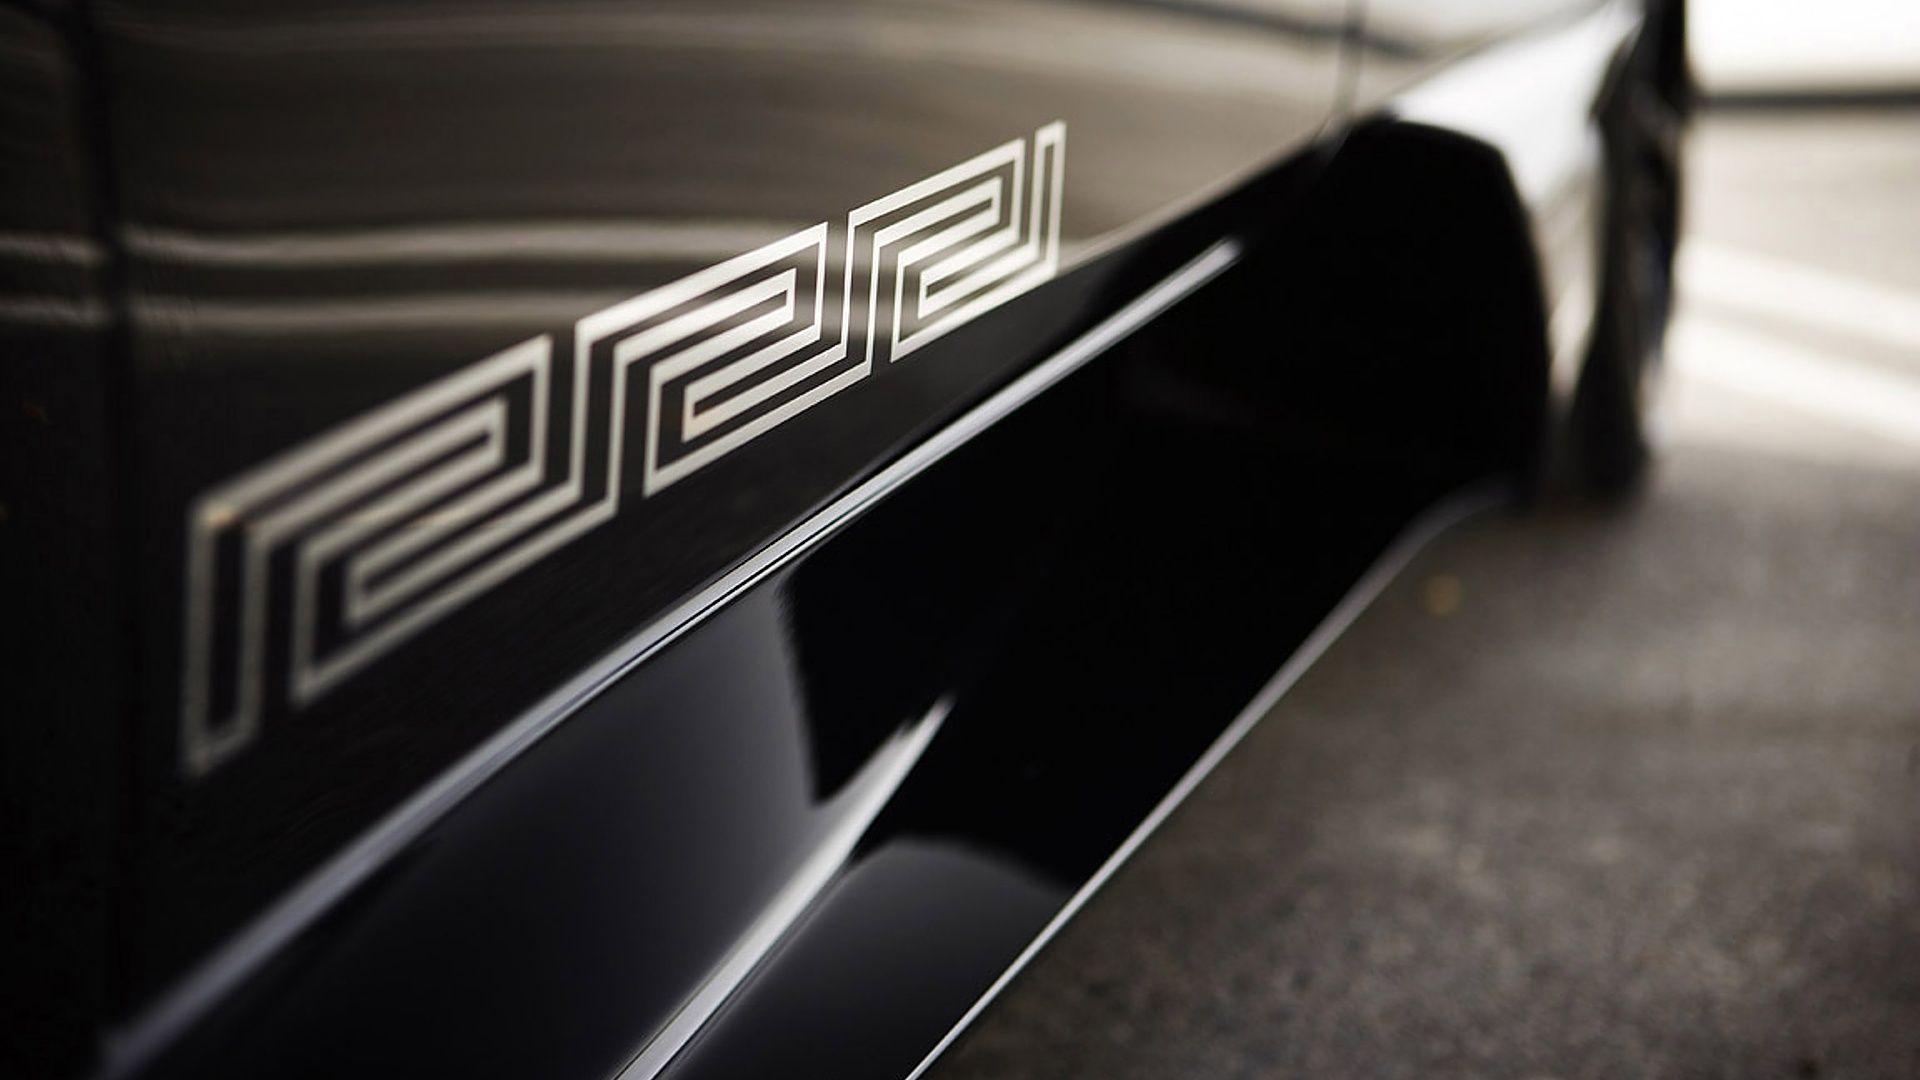 Lamborghini cars on HD Wallpaper.Wallpaper background, car